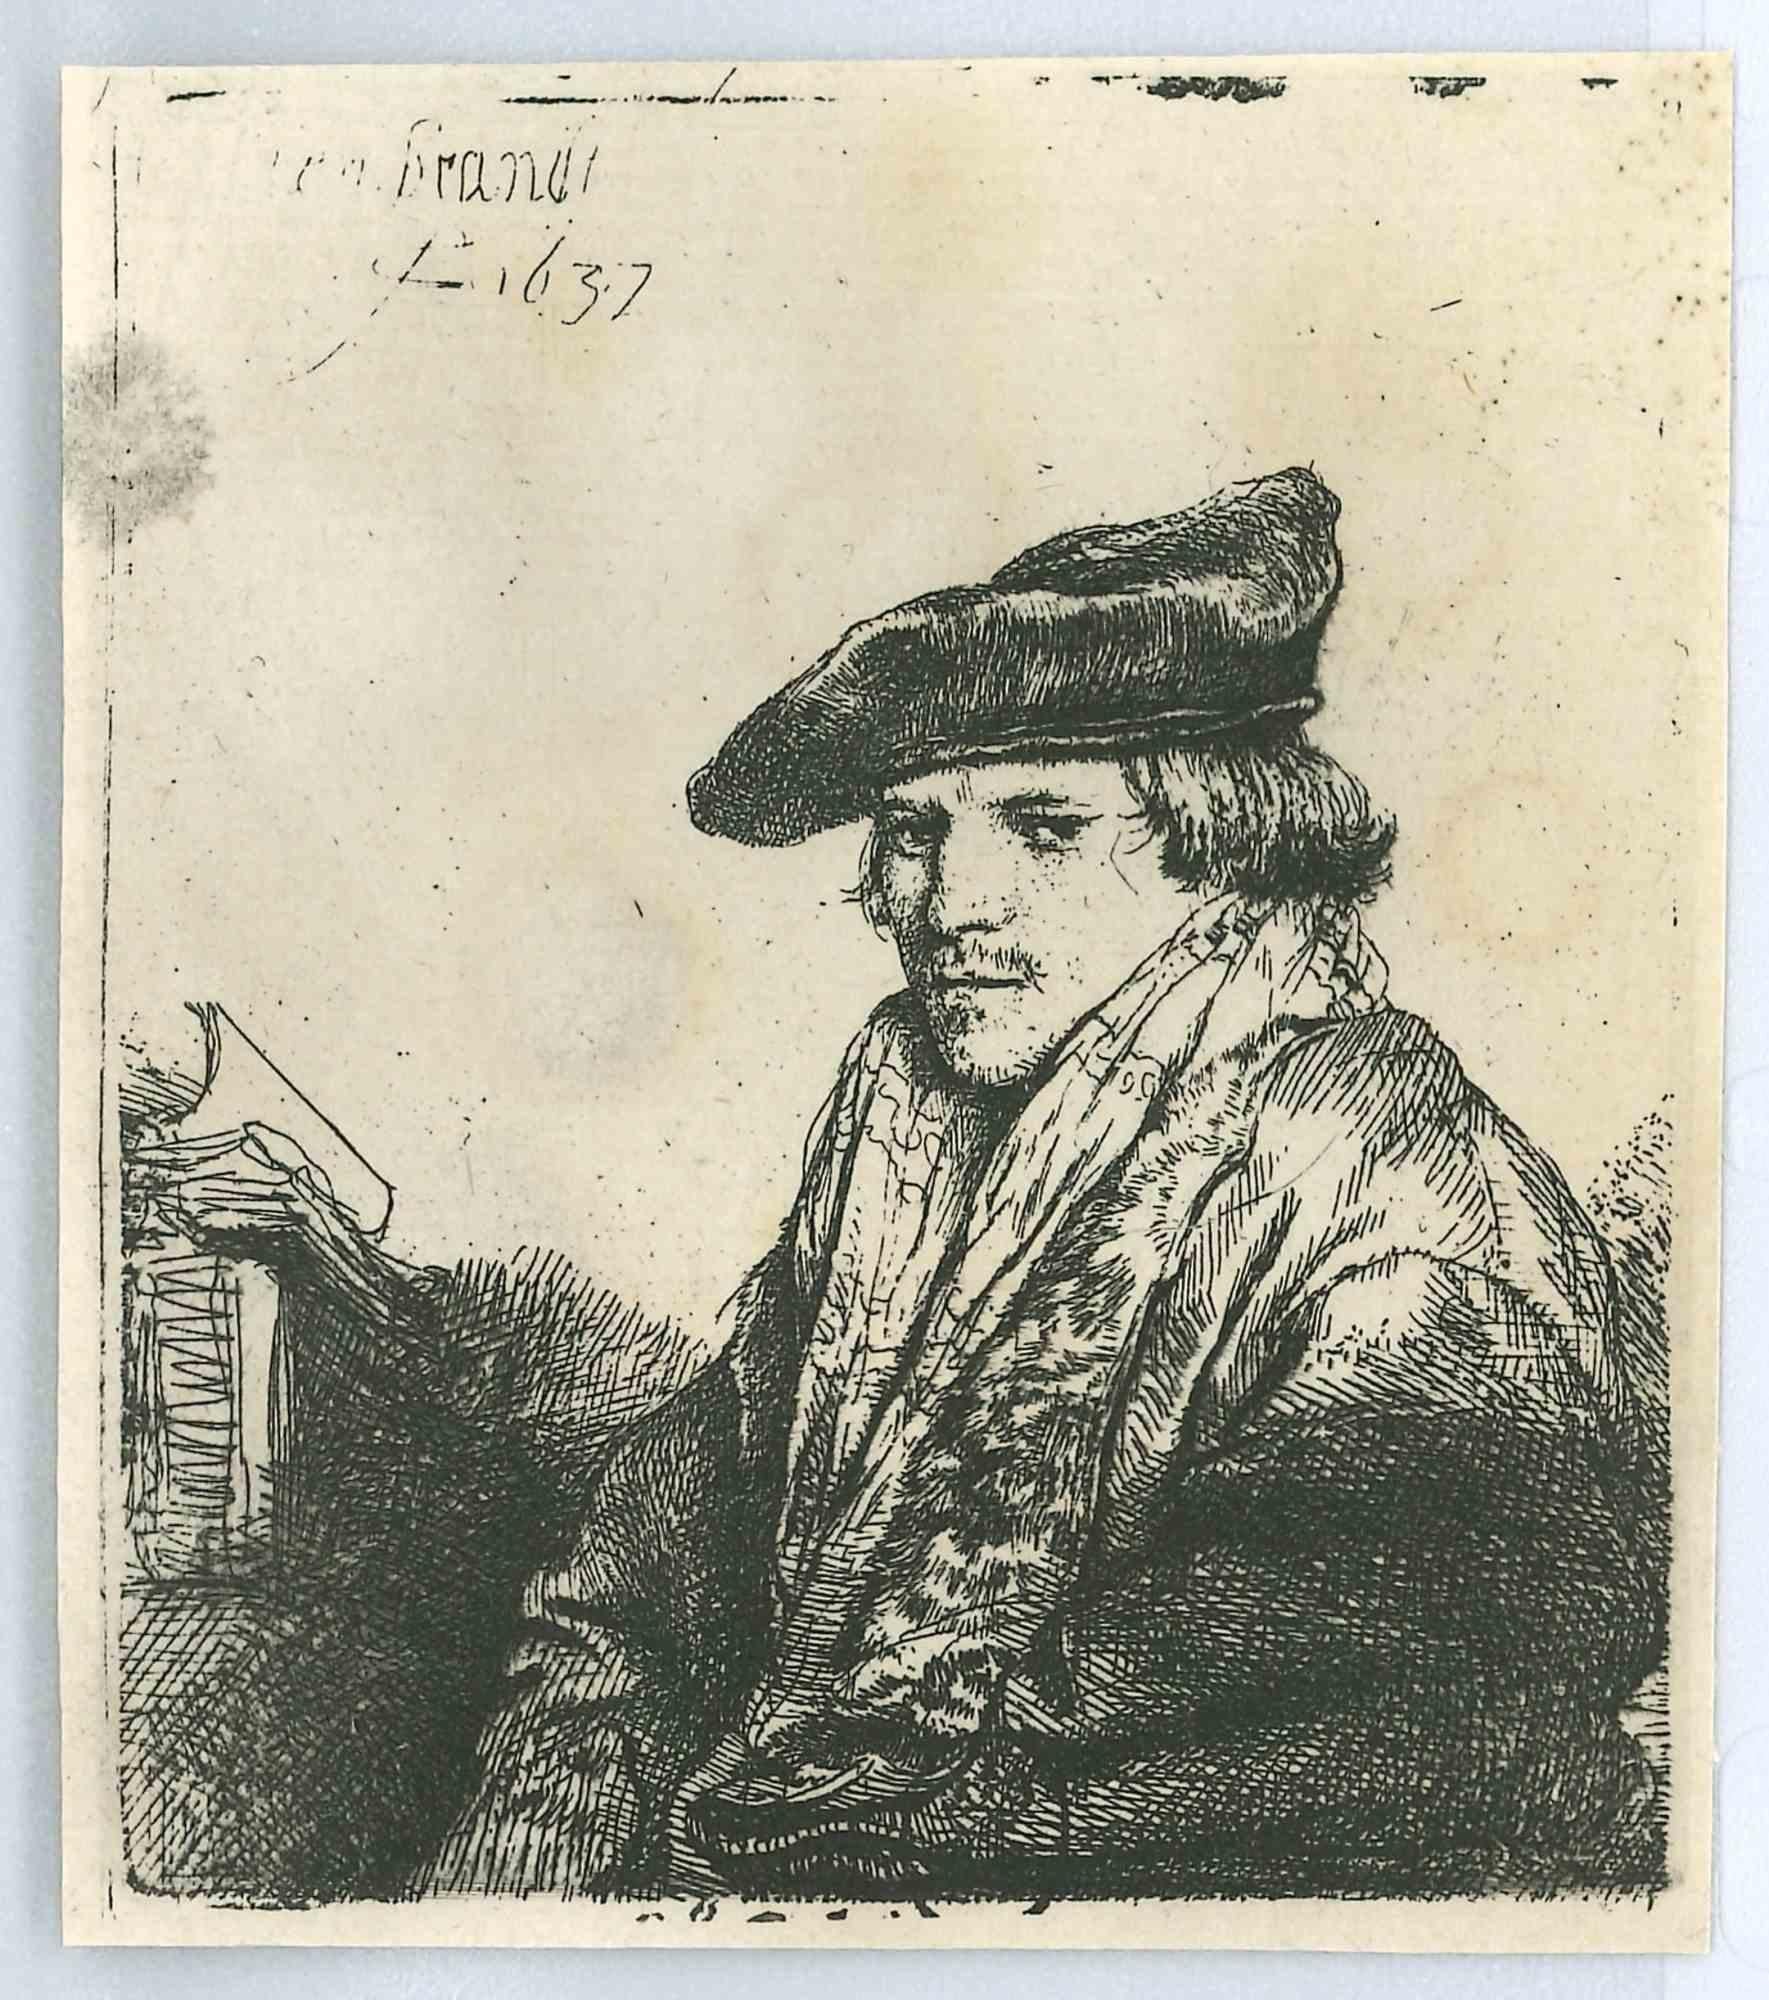 (After) Rembrandt van Rijn  Portrait Print - Young Man in a Velvet Cap - Etching after Rembrandt -19th Century